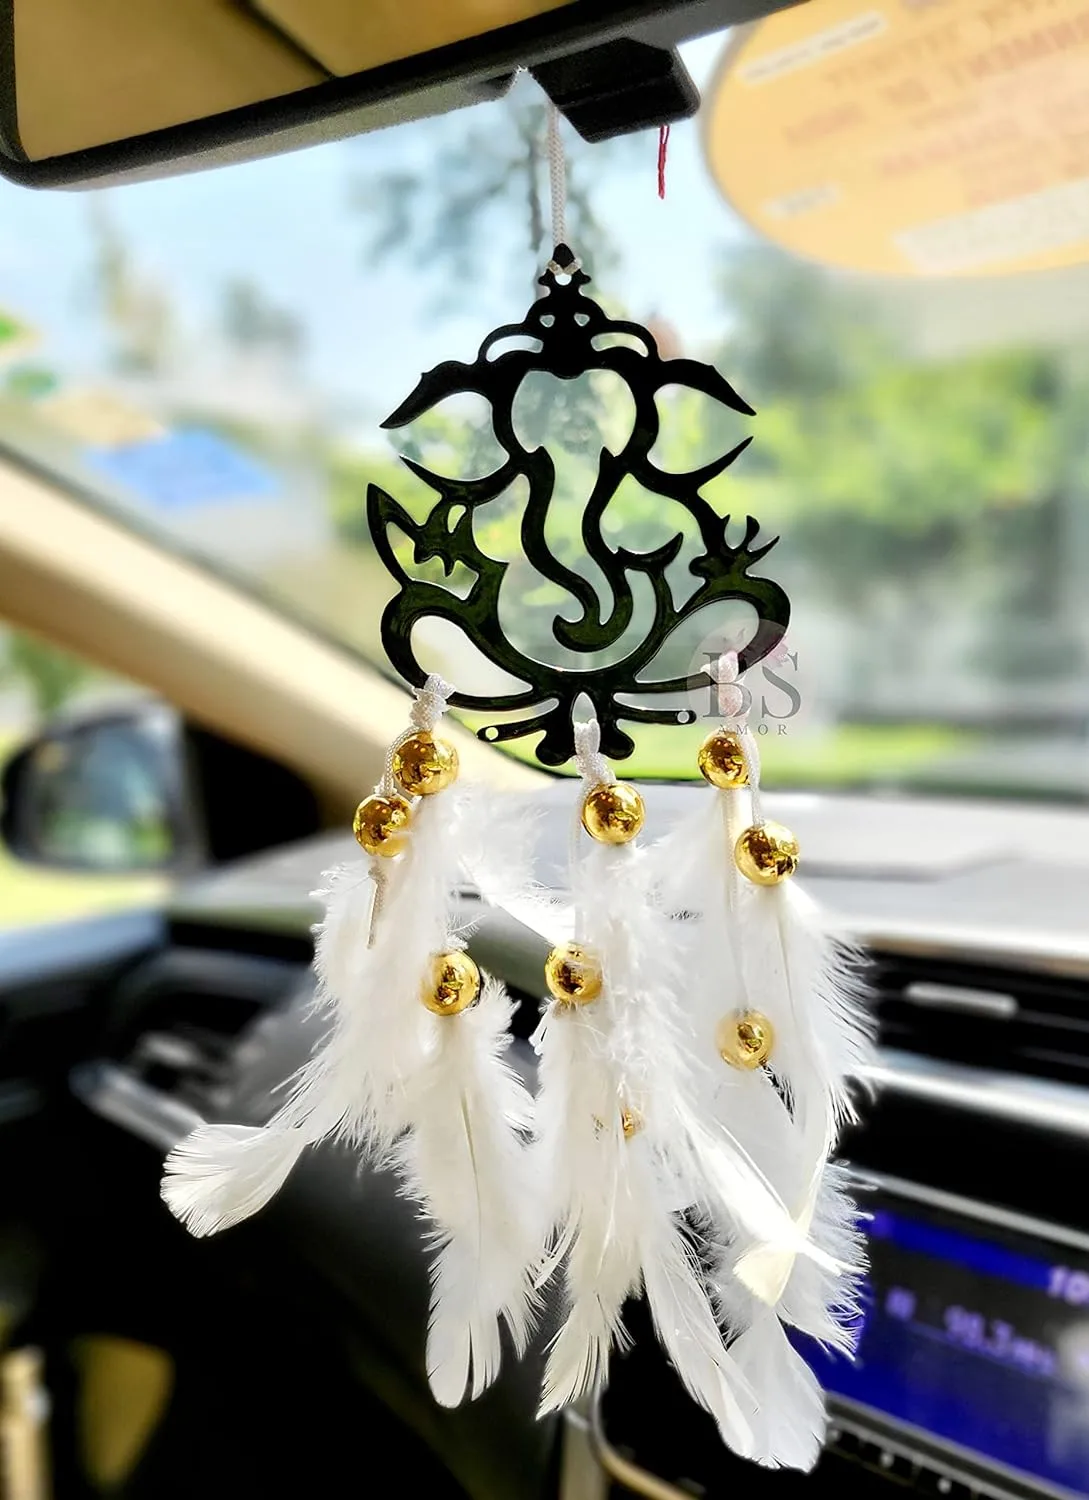 Ganesh ji Car/Wall Hanging Dream Catcher  -White Feathers